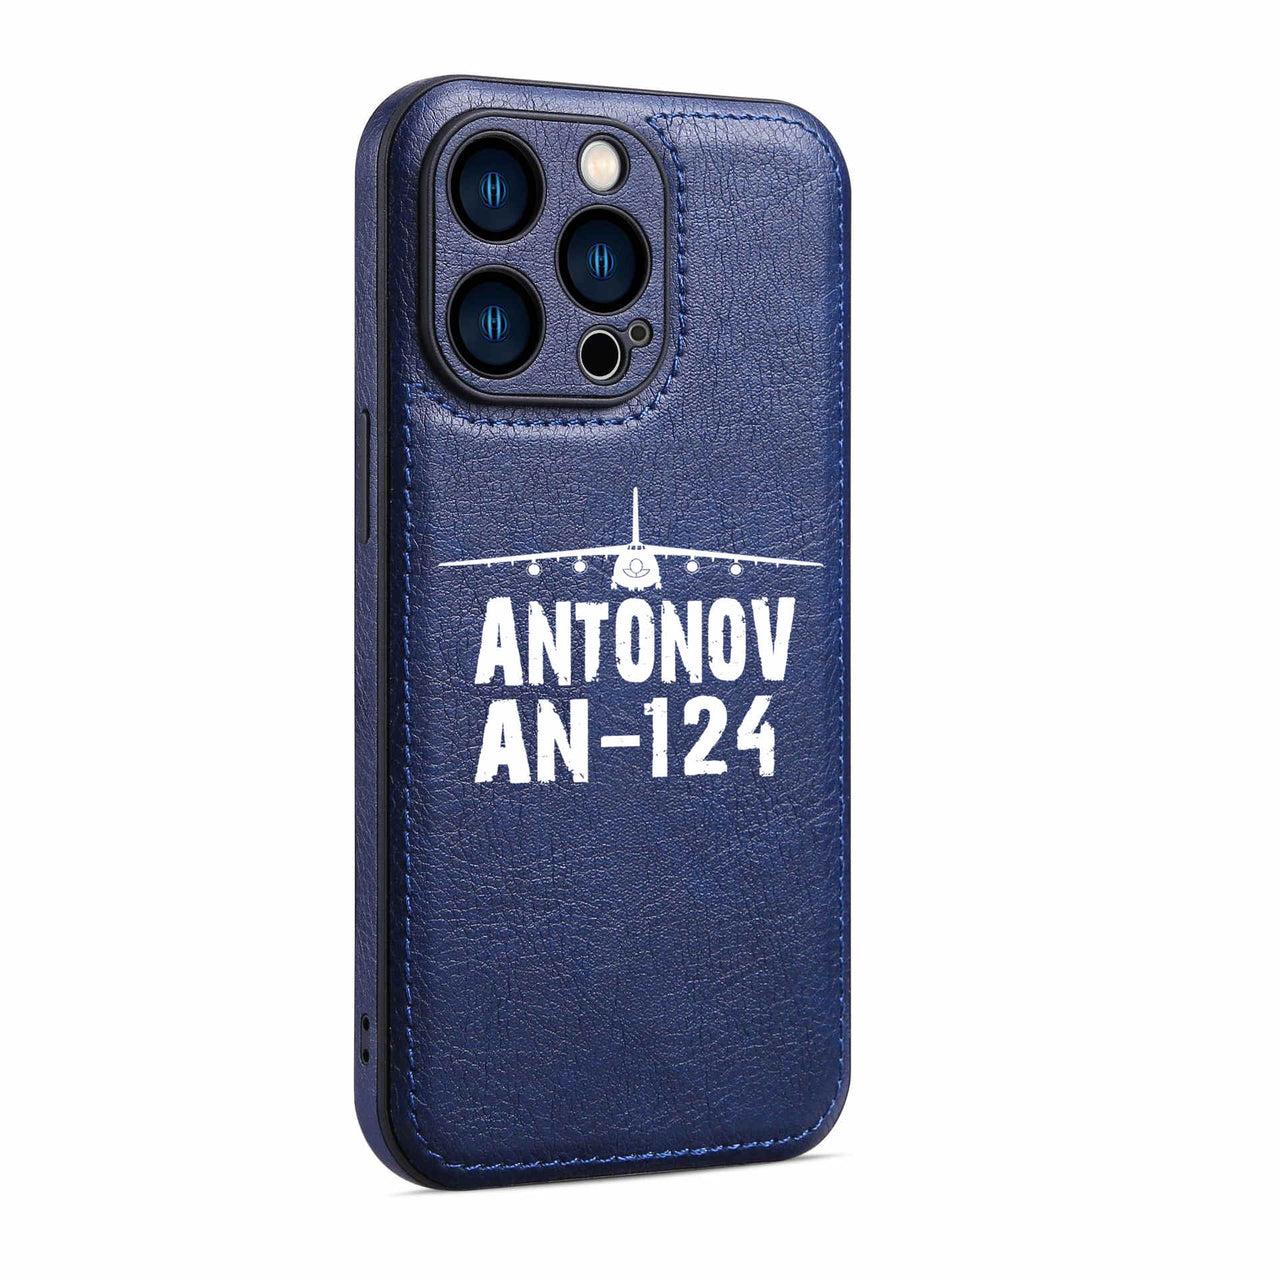 Antonov AN-124 & Plane Designed Leather iPhone Cases